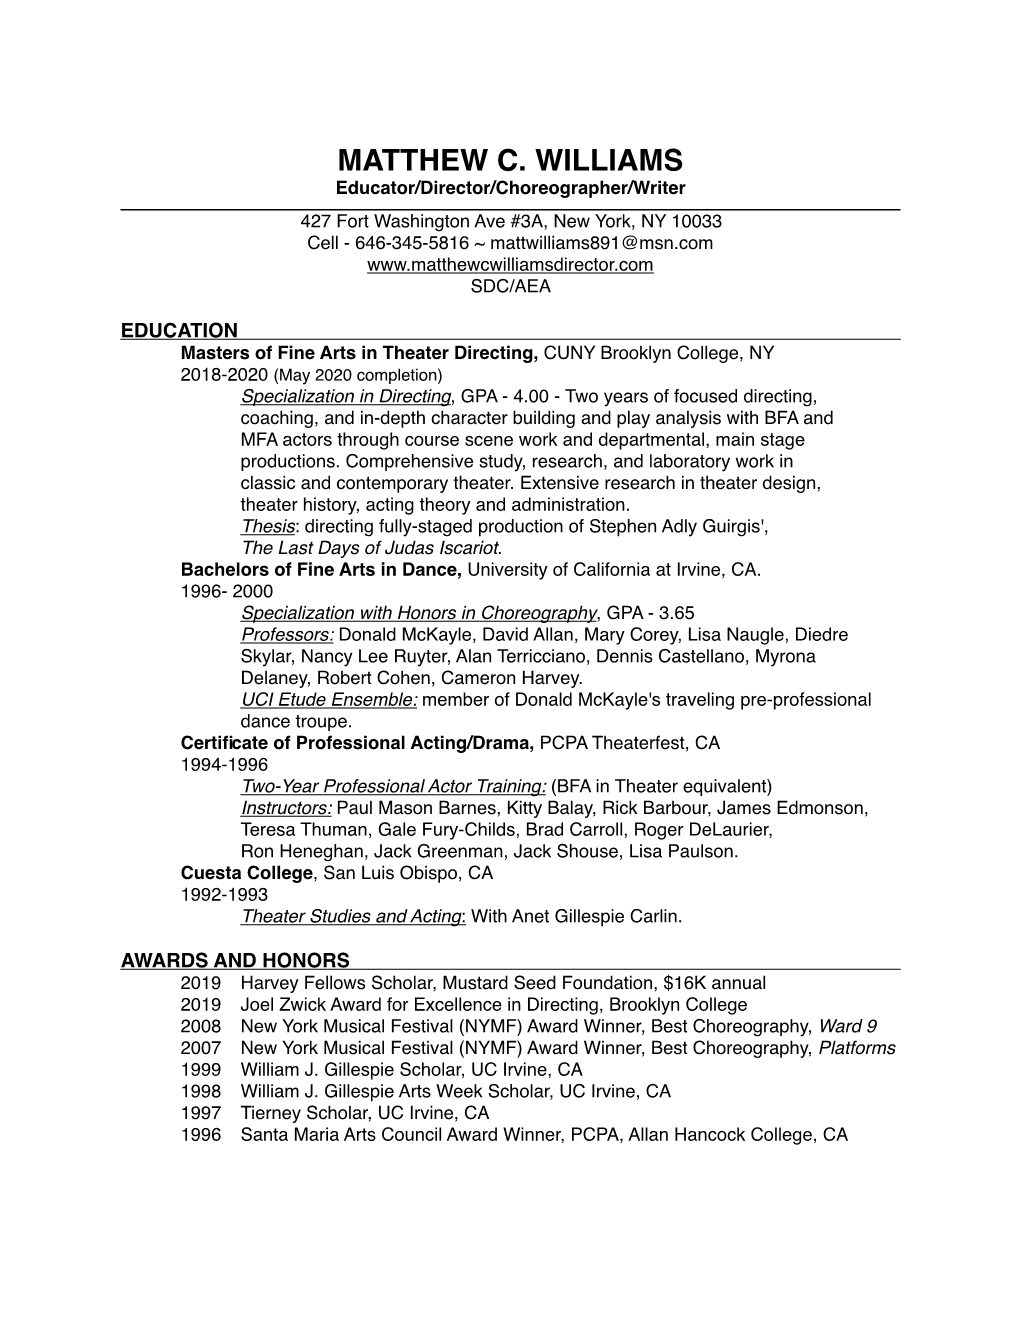 CV Matthew Williams 1/26